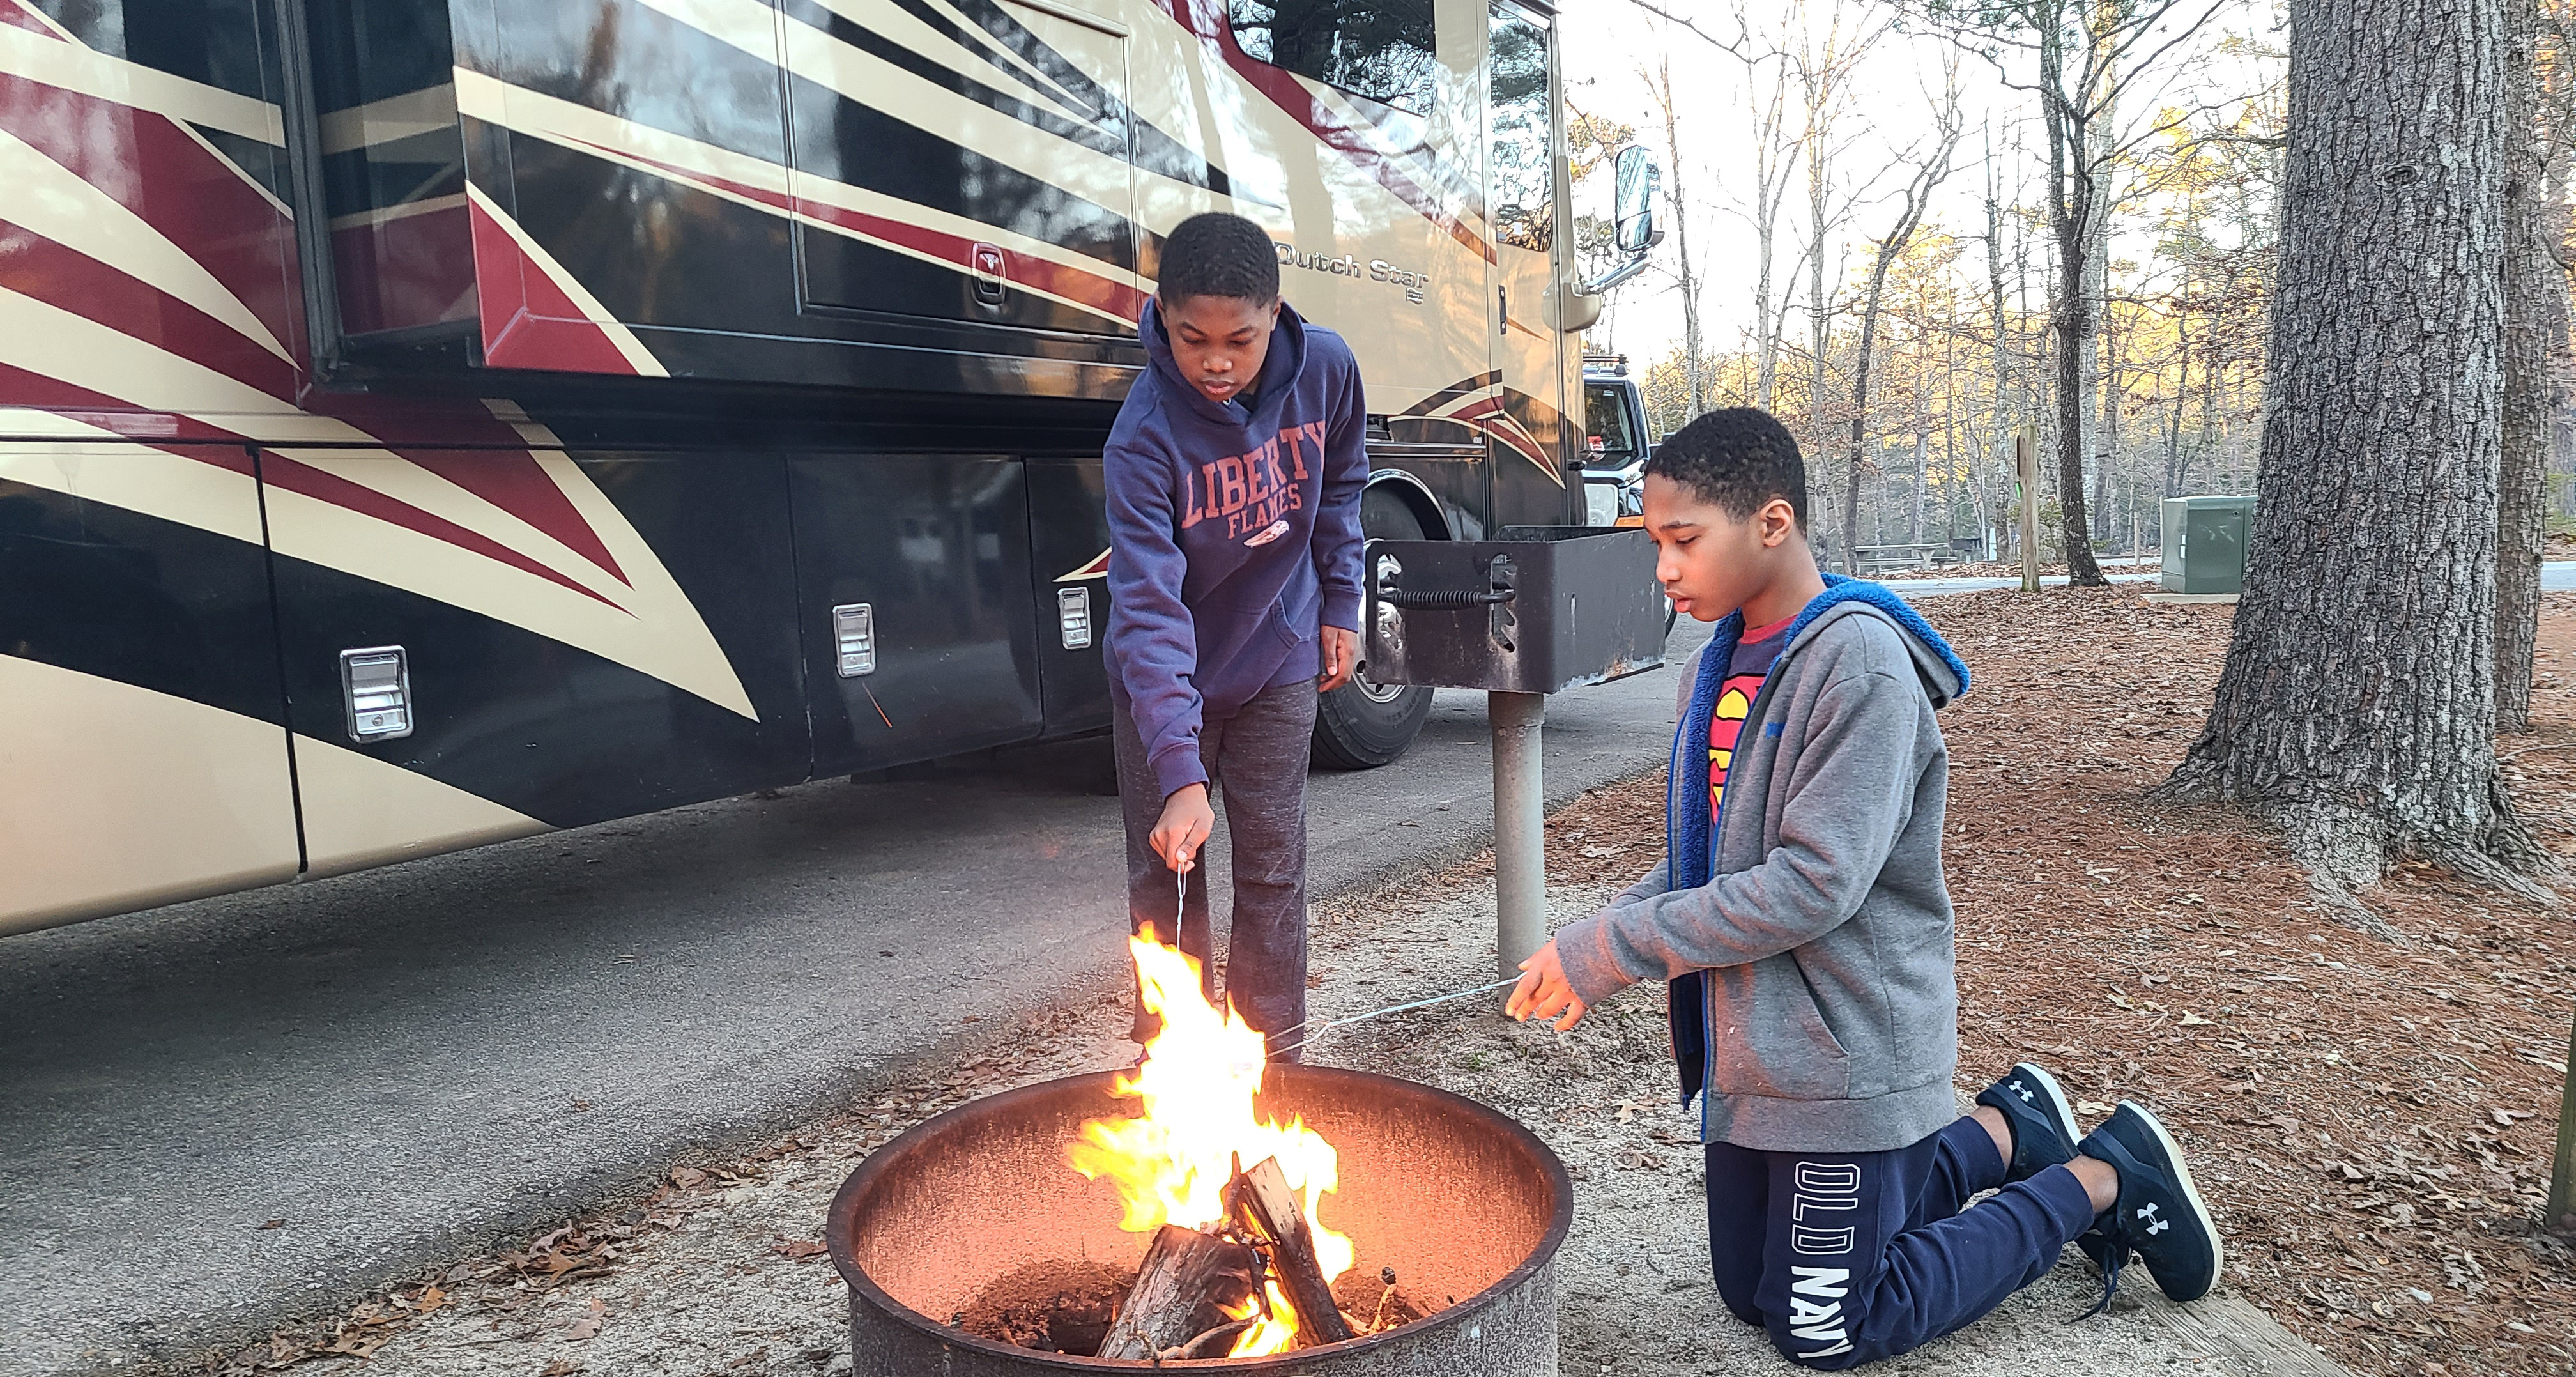 Making smores around the campfire